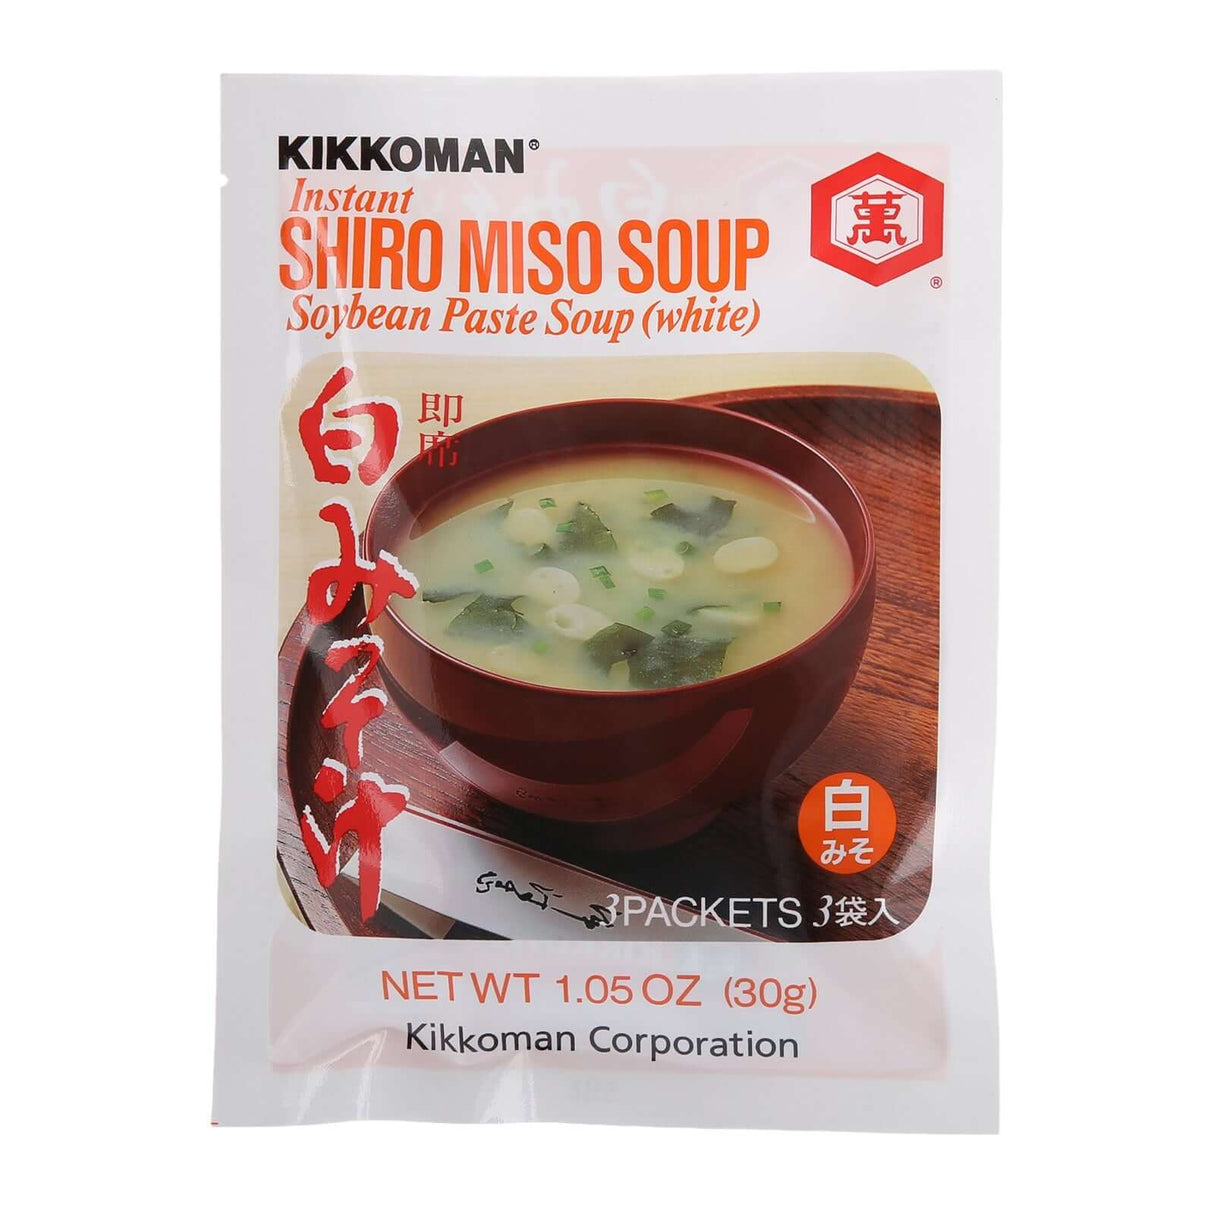 Kikkoman Instant Shiro Miso Soup